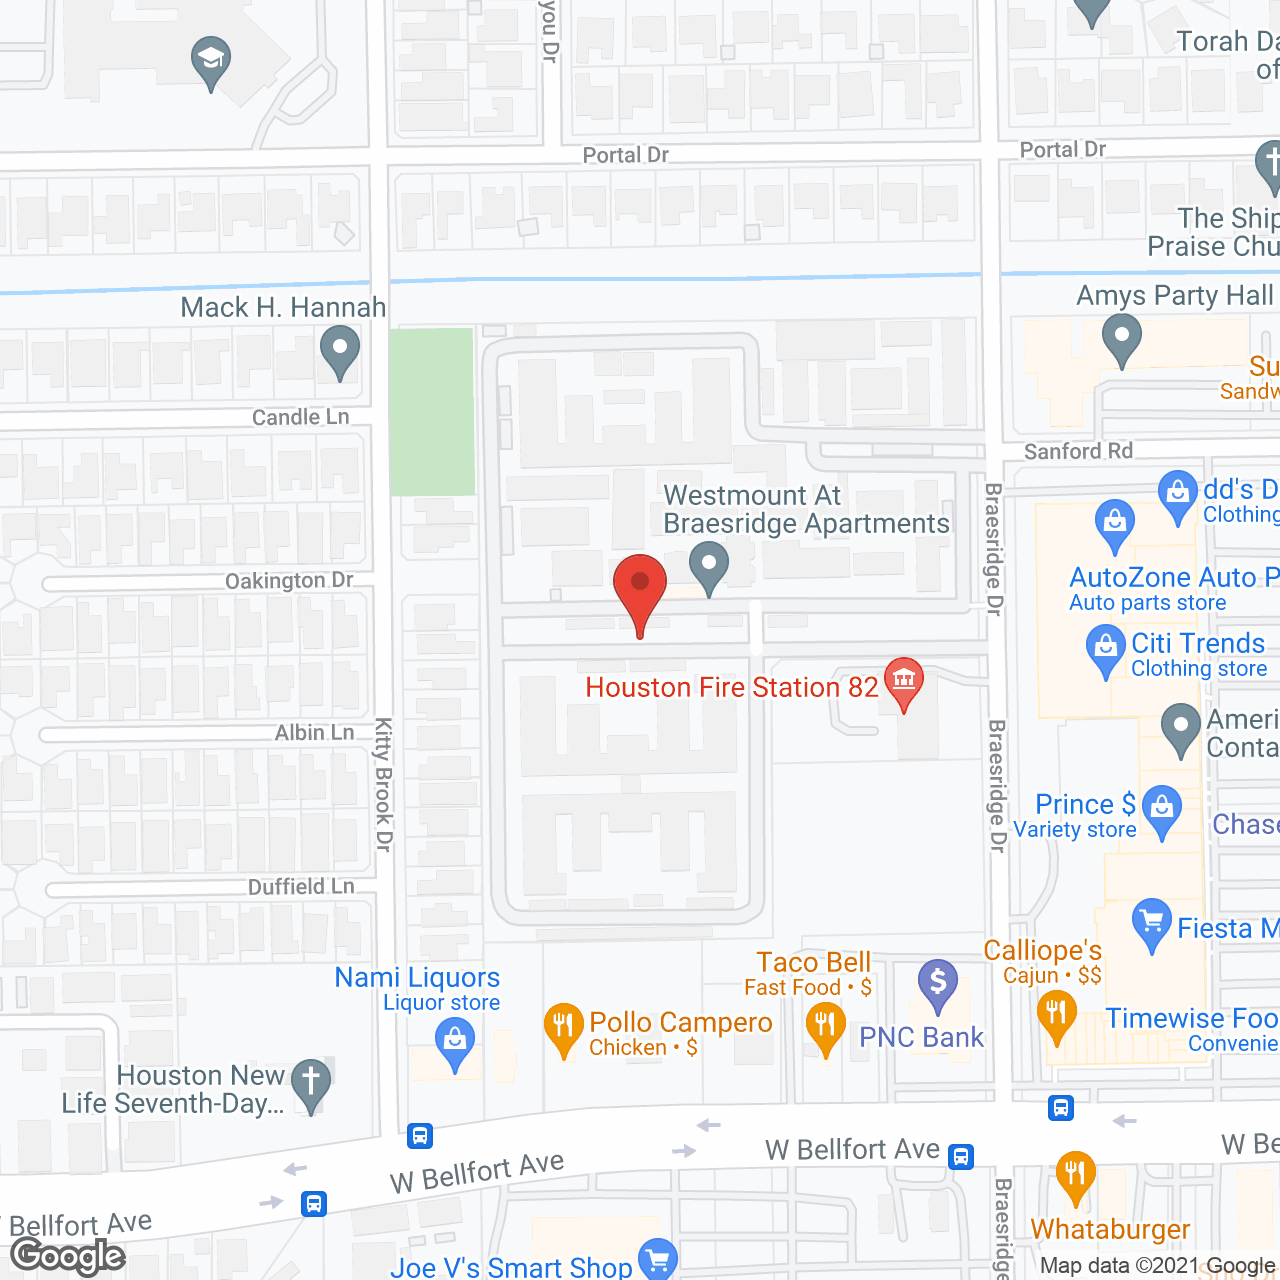 Braesridge Apartments in google map